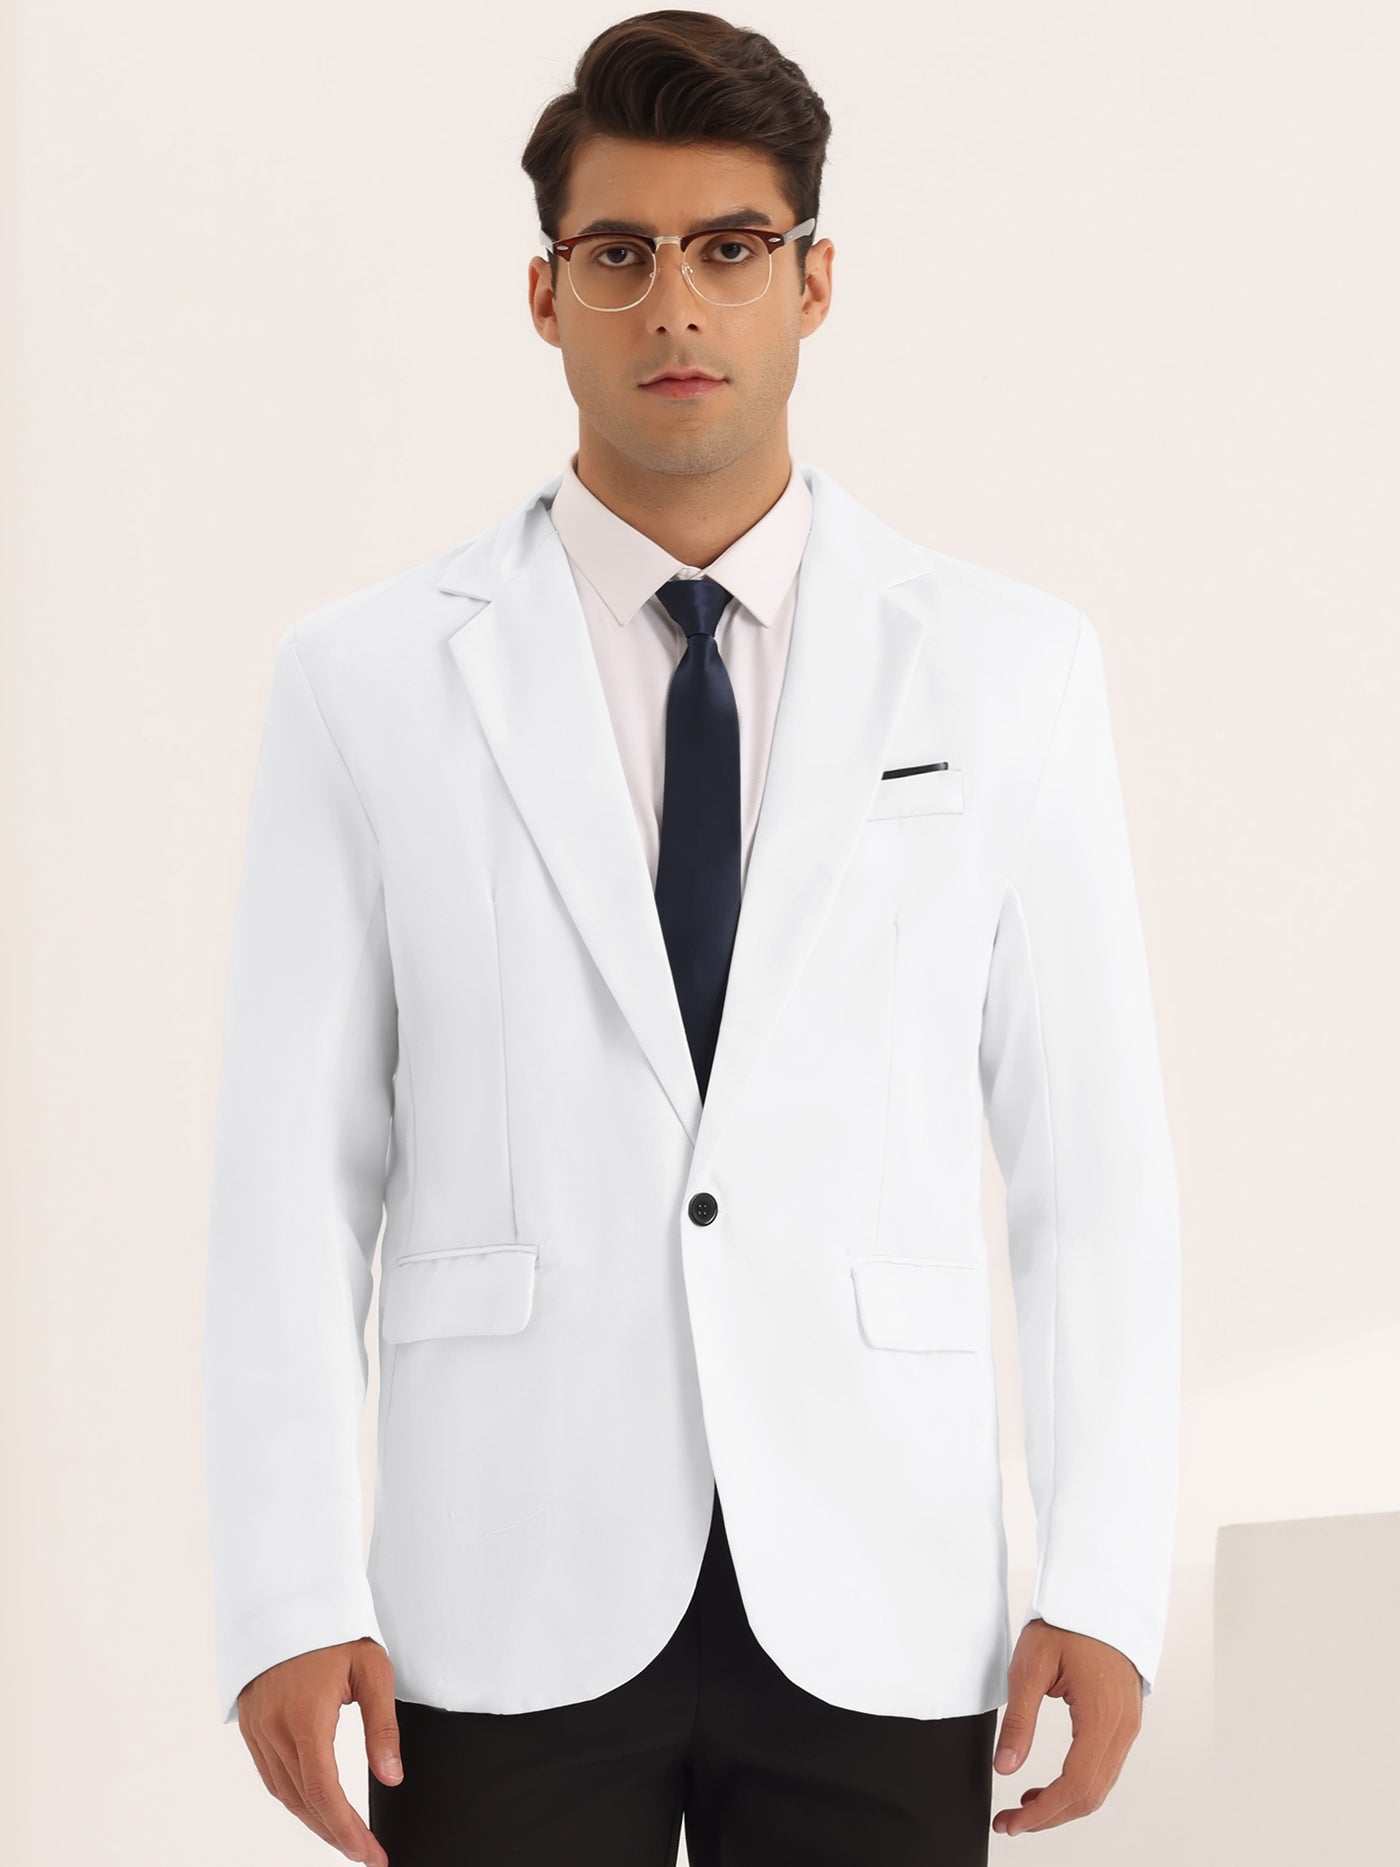 Bublédon Business Solid Blazer for Men's Notched Lapel Button Down Sports Coats